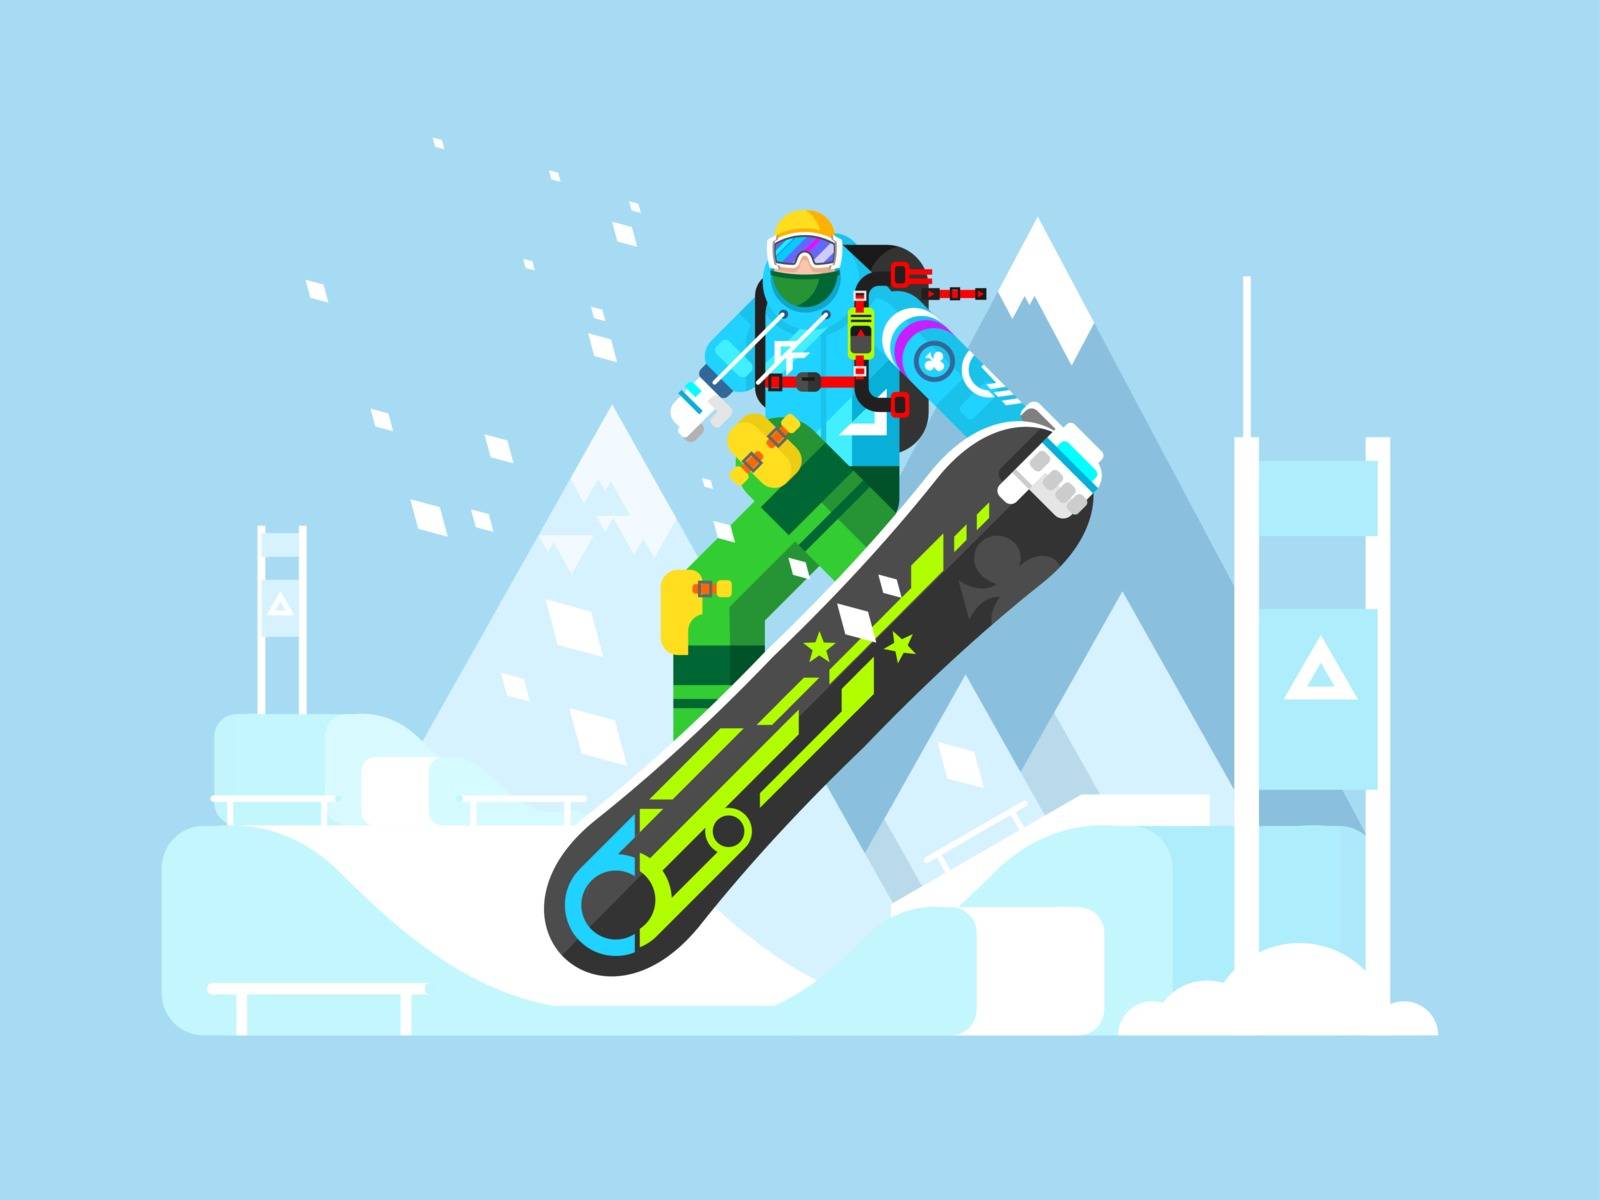 Snowboarder cartoon character  by jossdiim